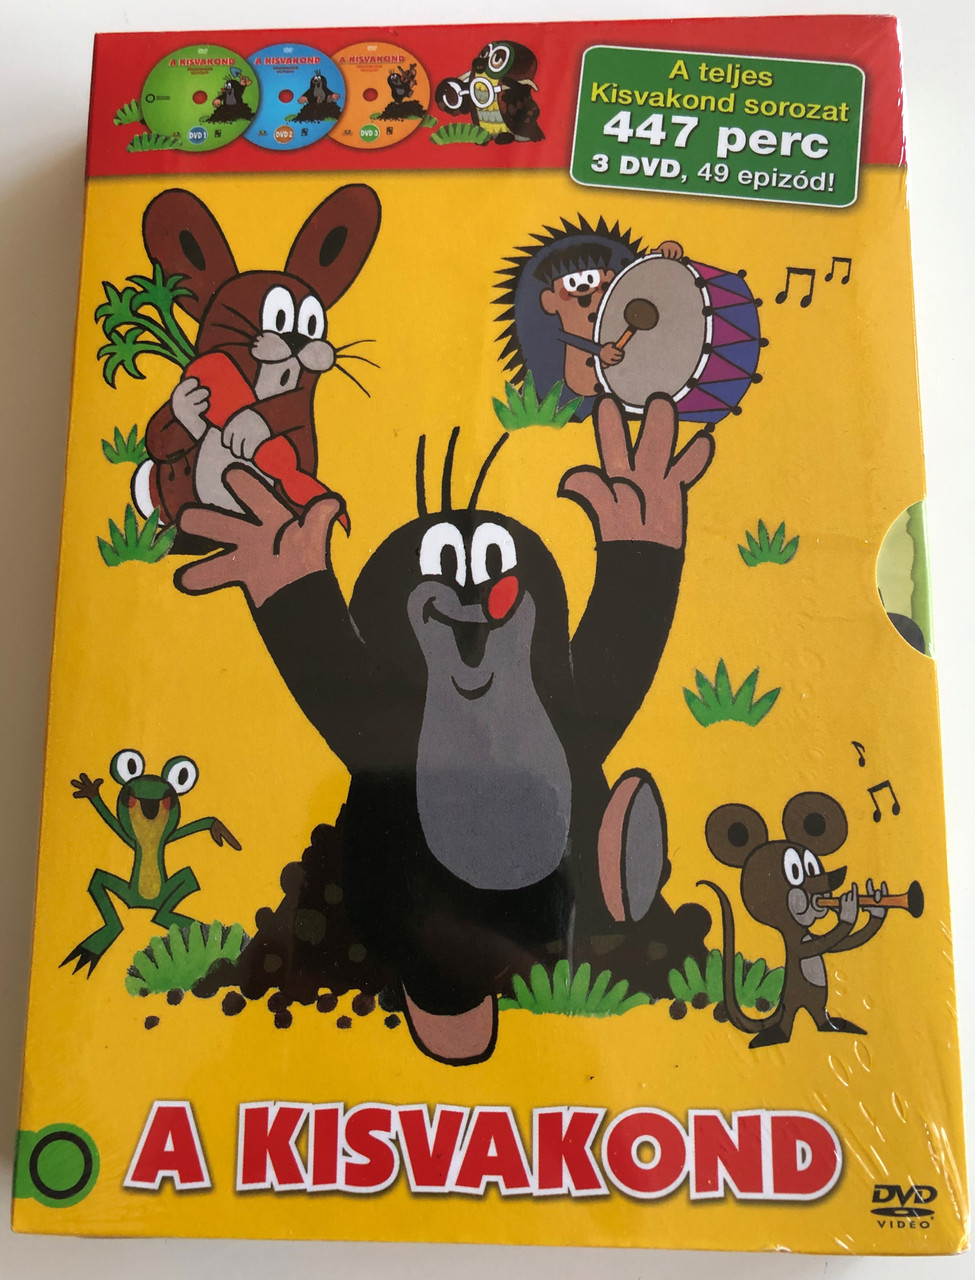 A kisvakond DVD SET Krtek the Mole Full Series / 3 Discs - 447 minutes - 49  episodes / Kisvakond teljes sorozat - Bible in My Language